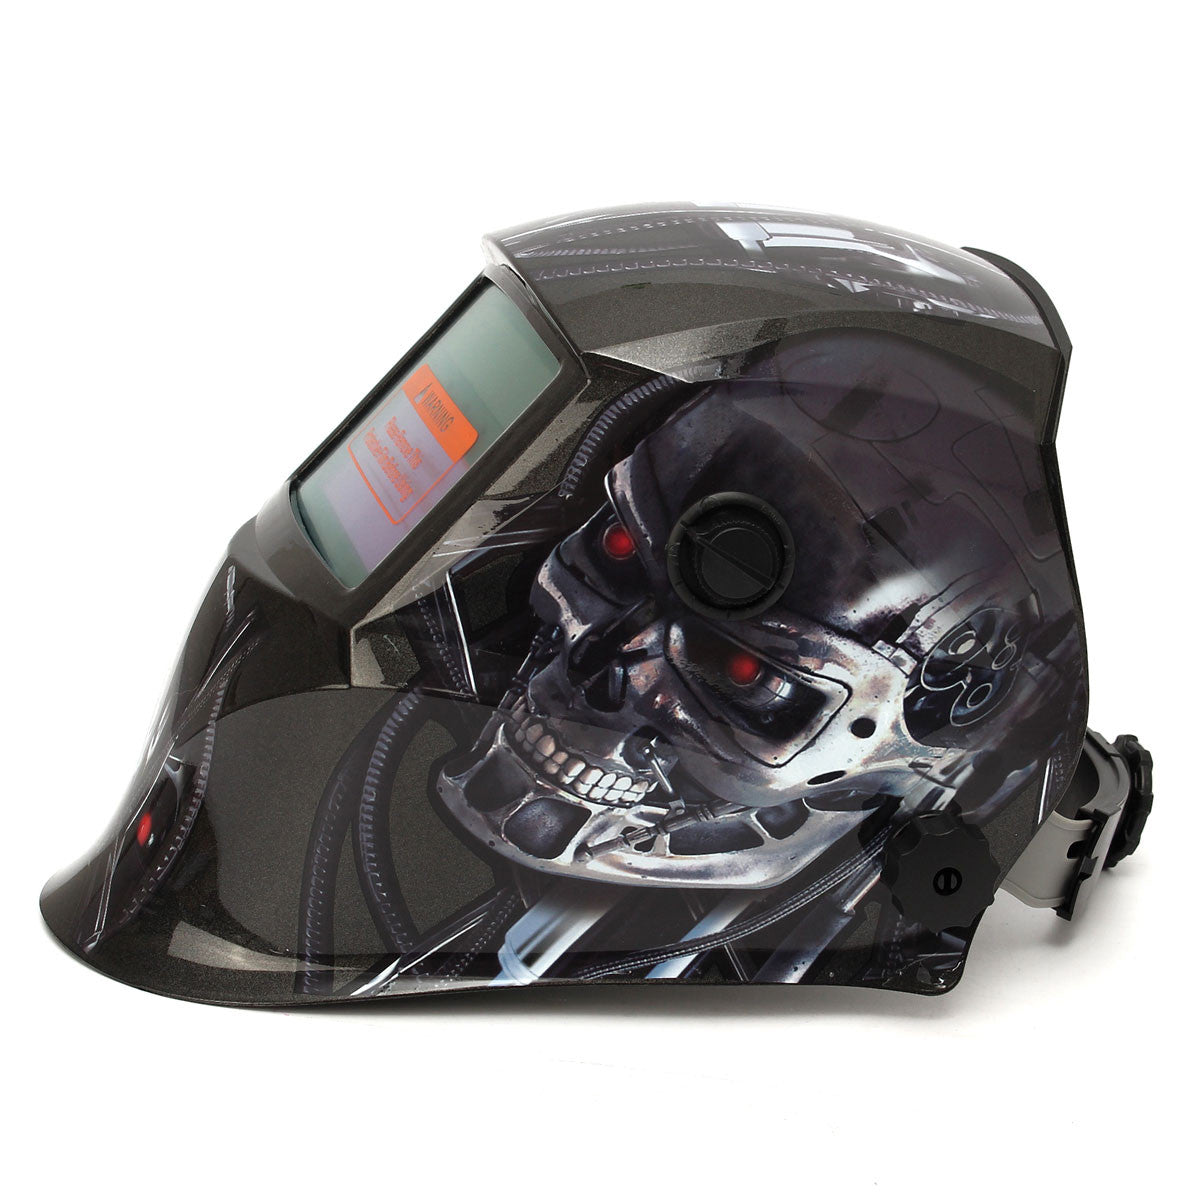 Cool Robot Solar Auto Darkening Welding/Grinding Helmet Mig Tig Arc Mask